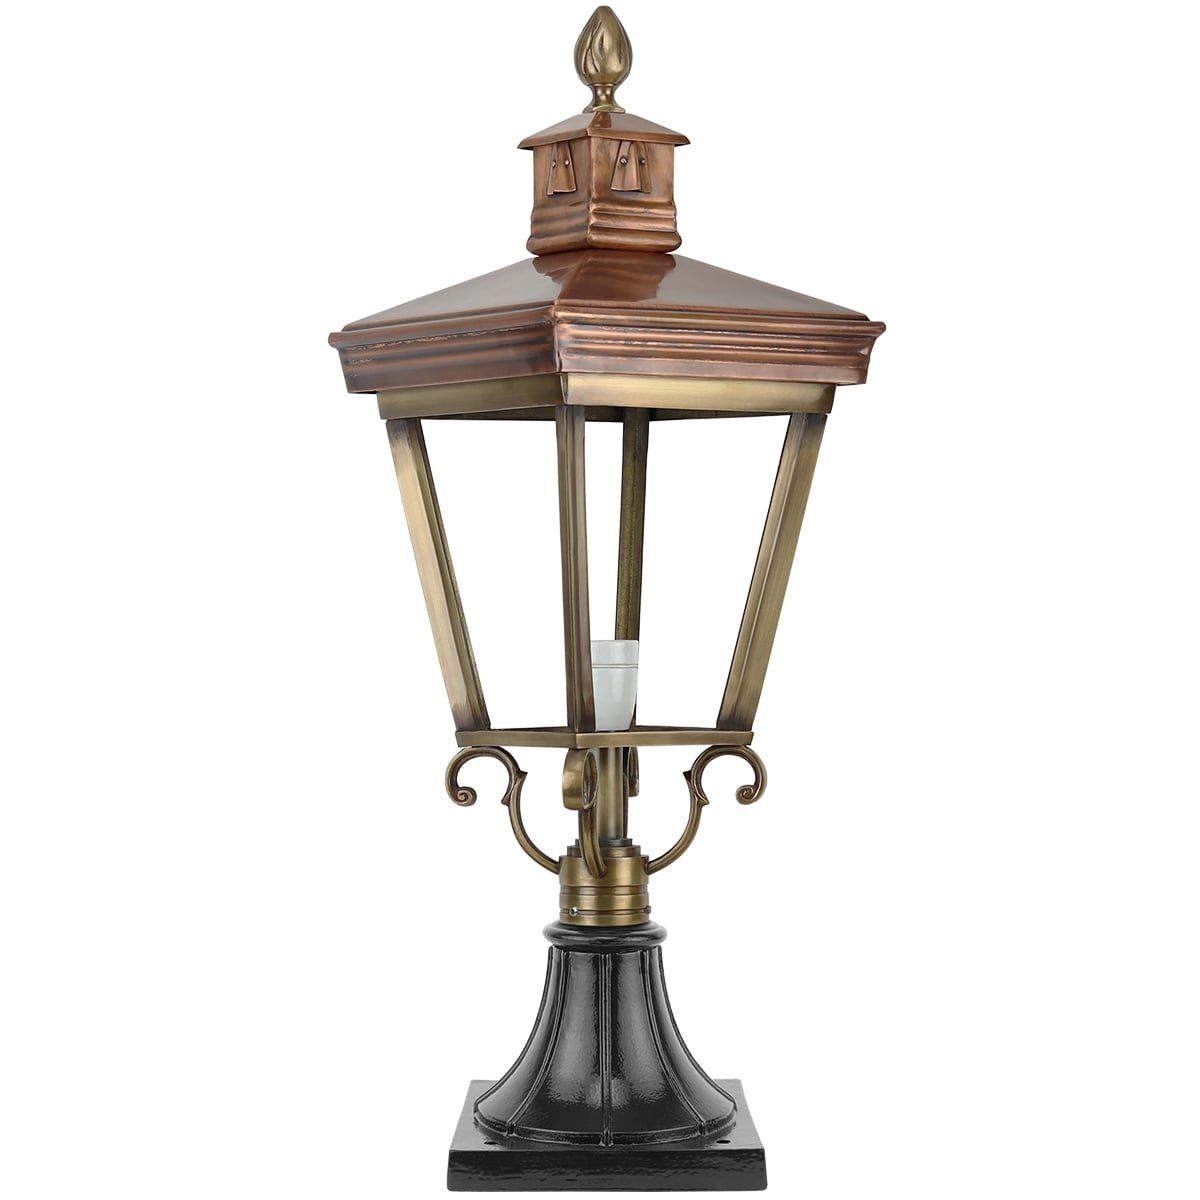 Erf lamp Exloërveen brons - 75 cm